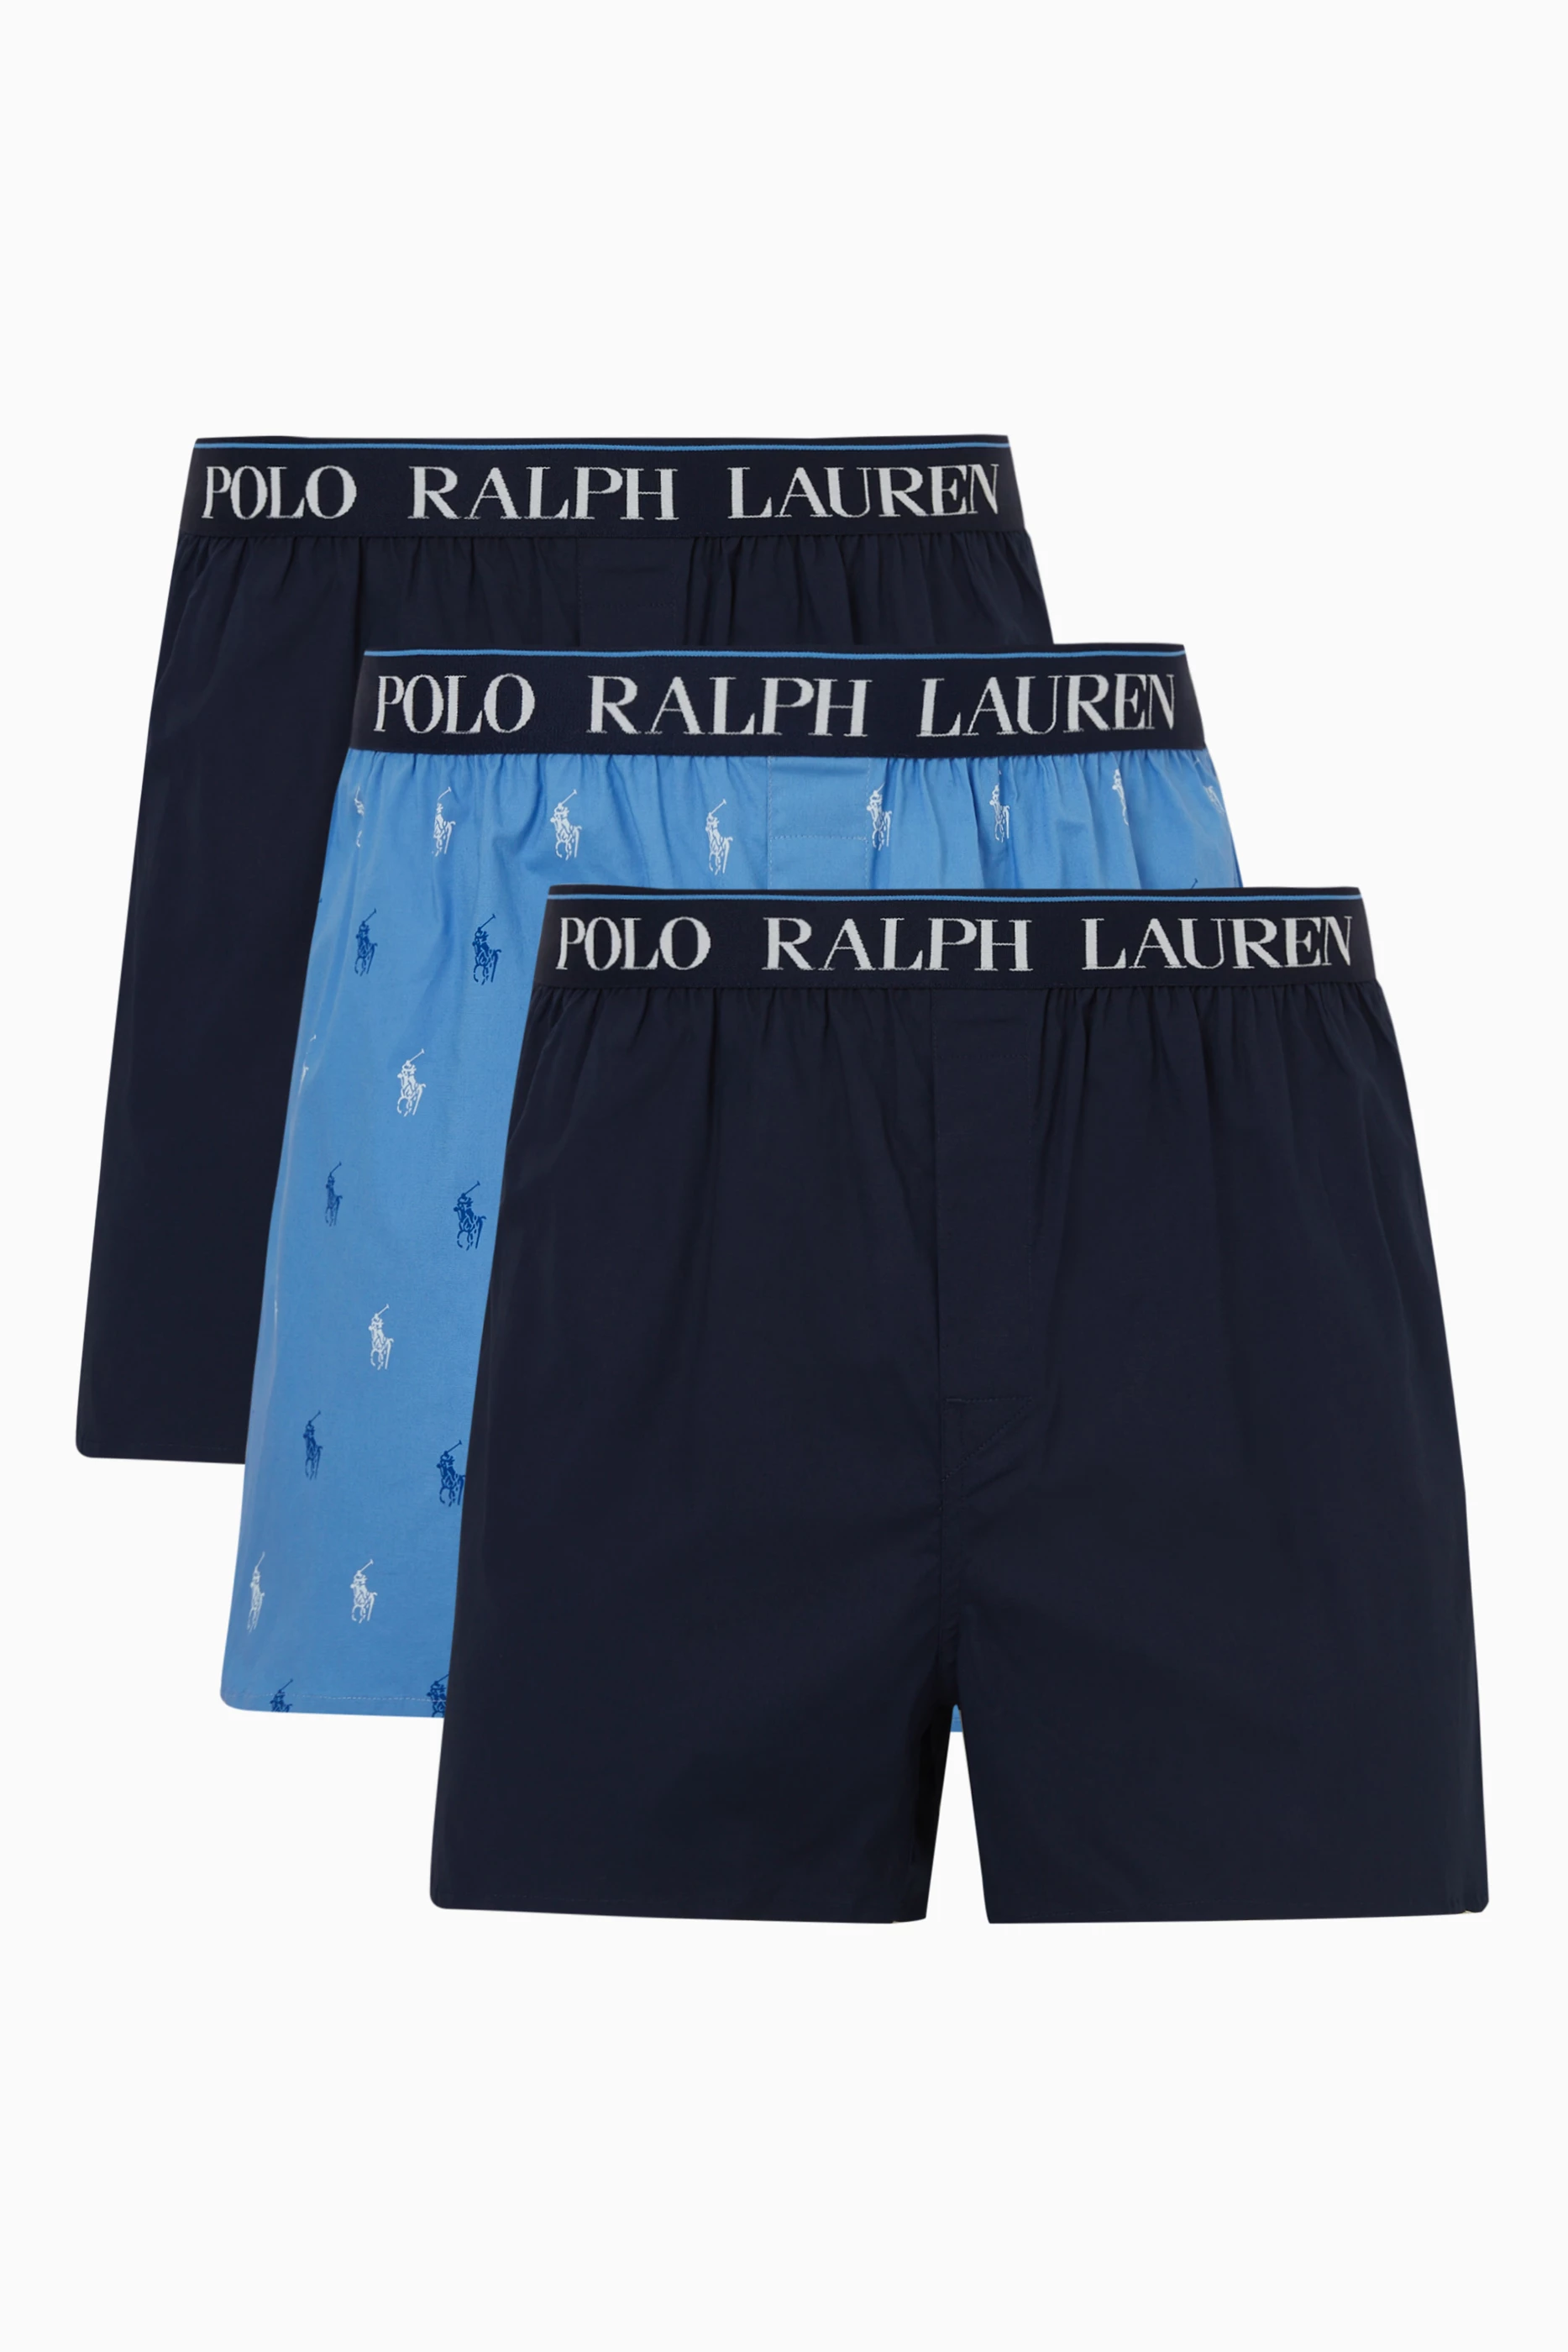 Polo Ralph Lauren Little/Big Boys 4-20 Stretch Knit Boxers, 49% OFF